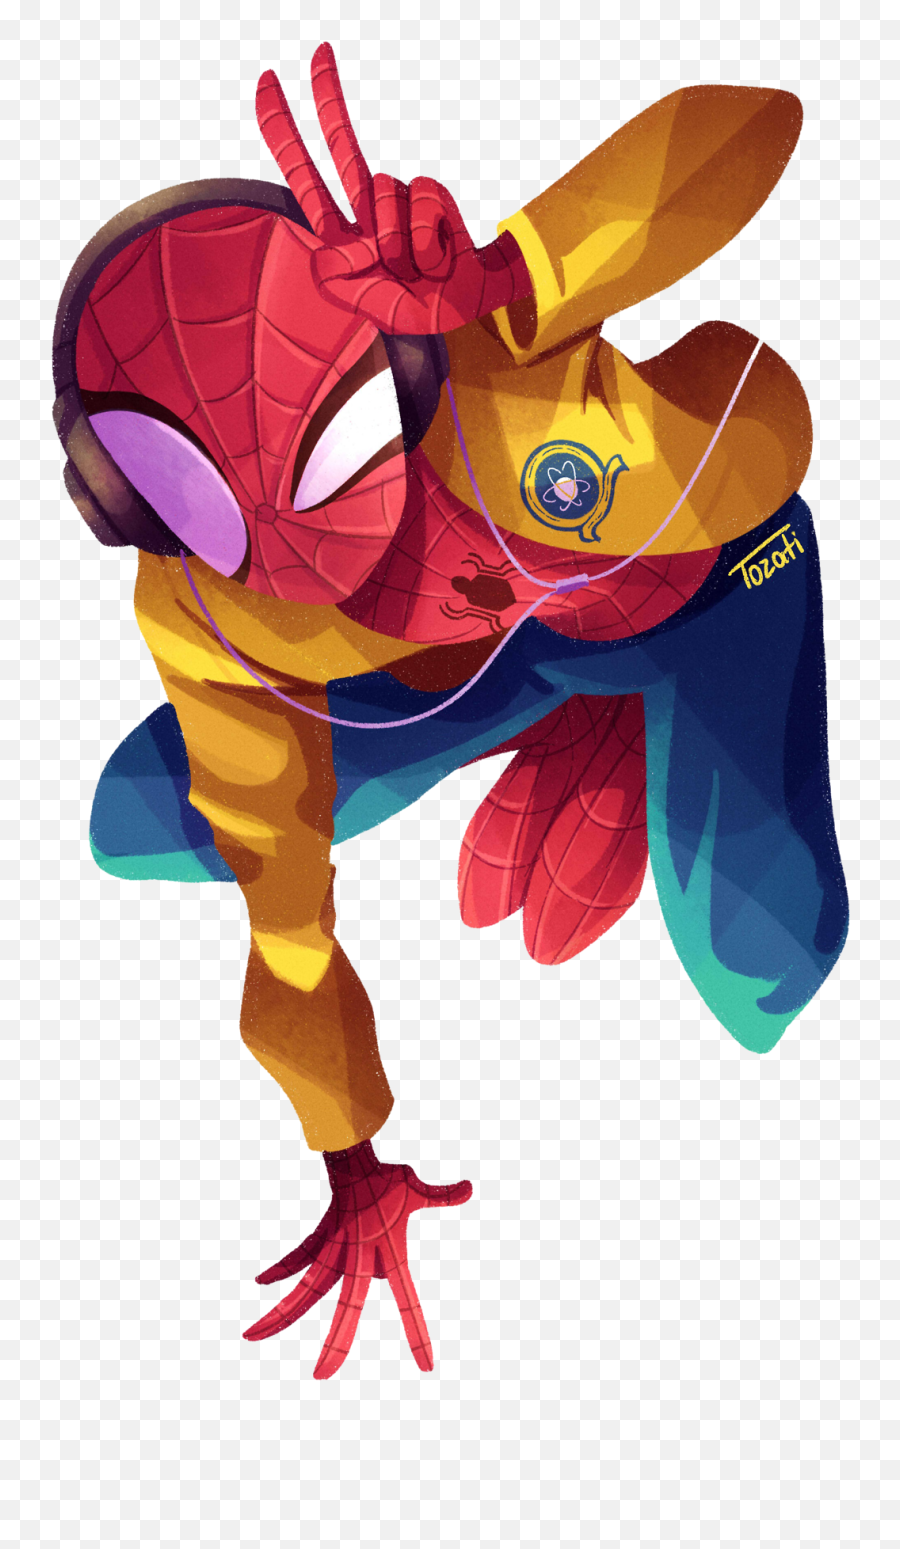 Spider Man Homecoming Fan Art - Spider Man Homecoming Fanart Png,Spider Man Homecoming Logo